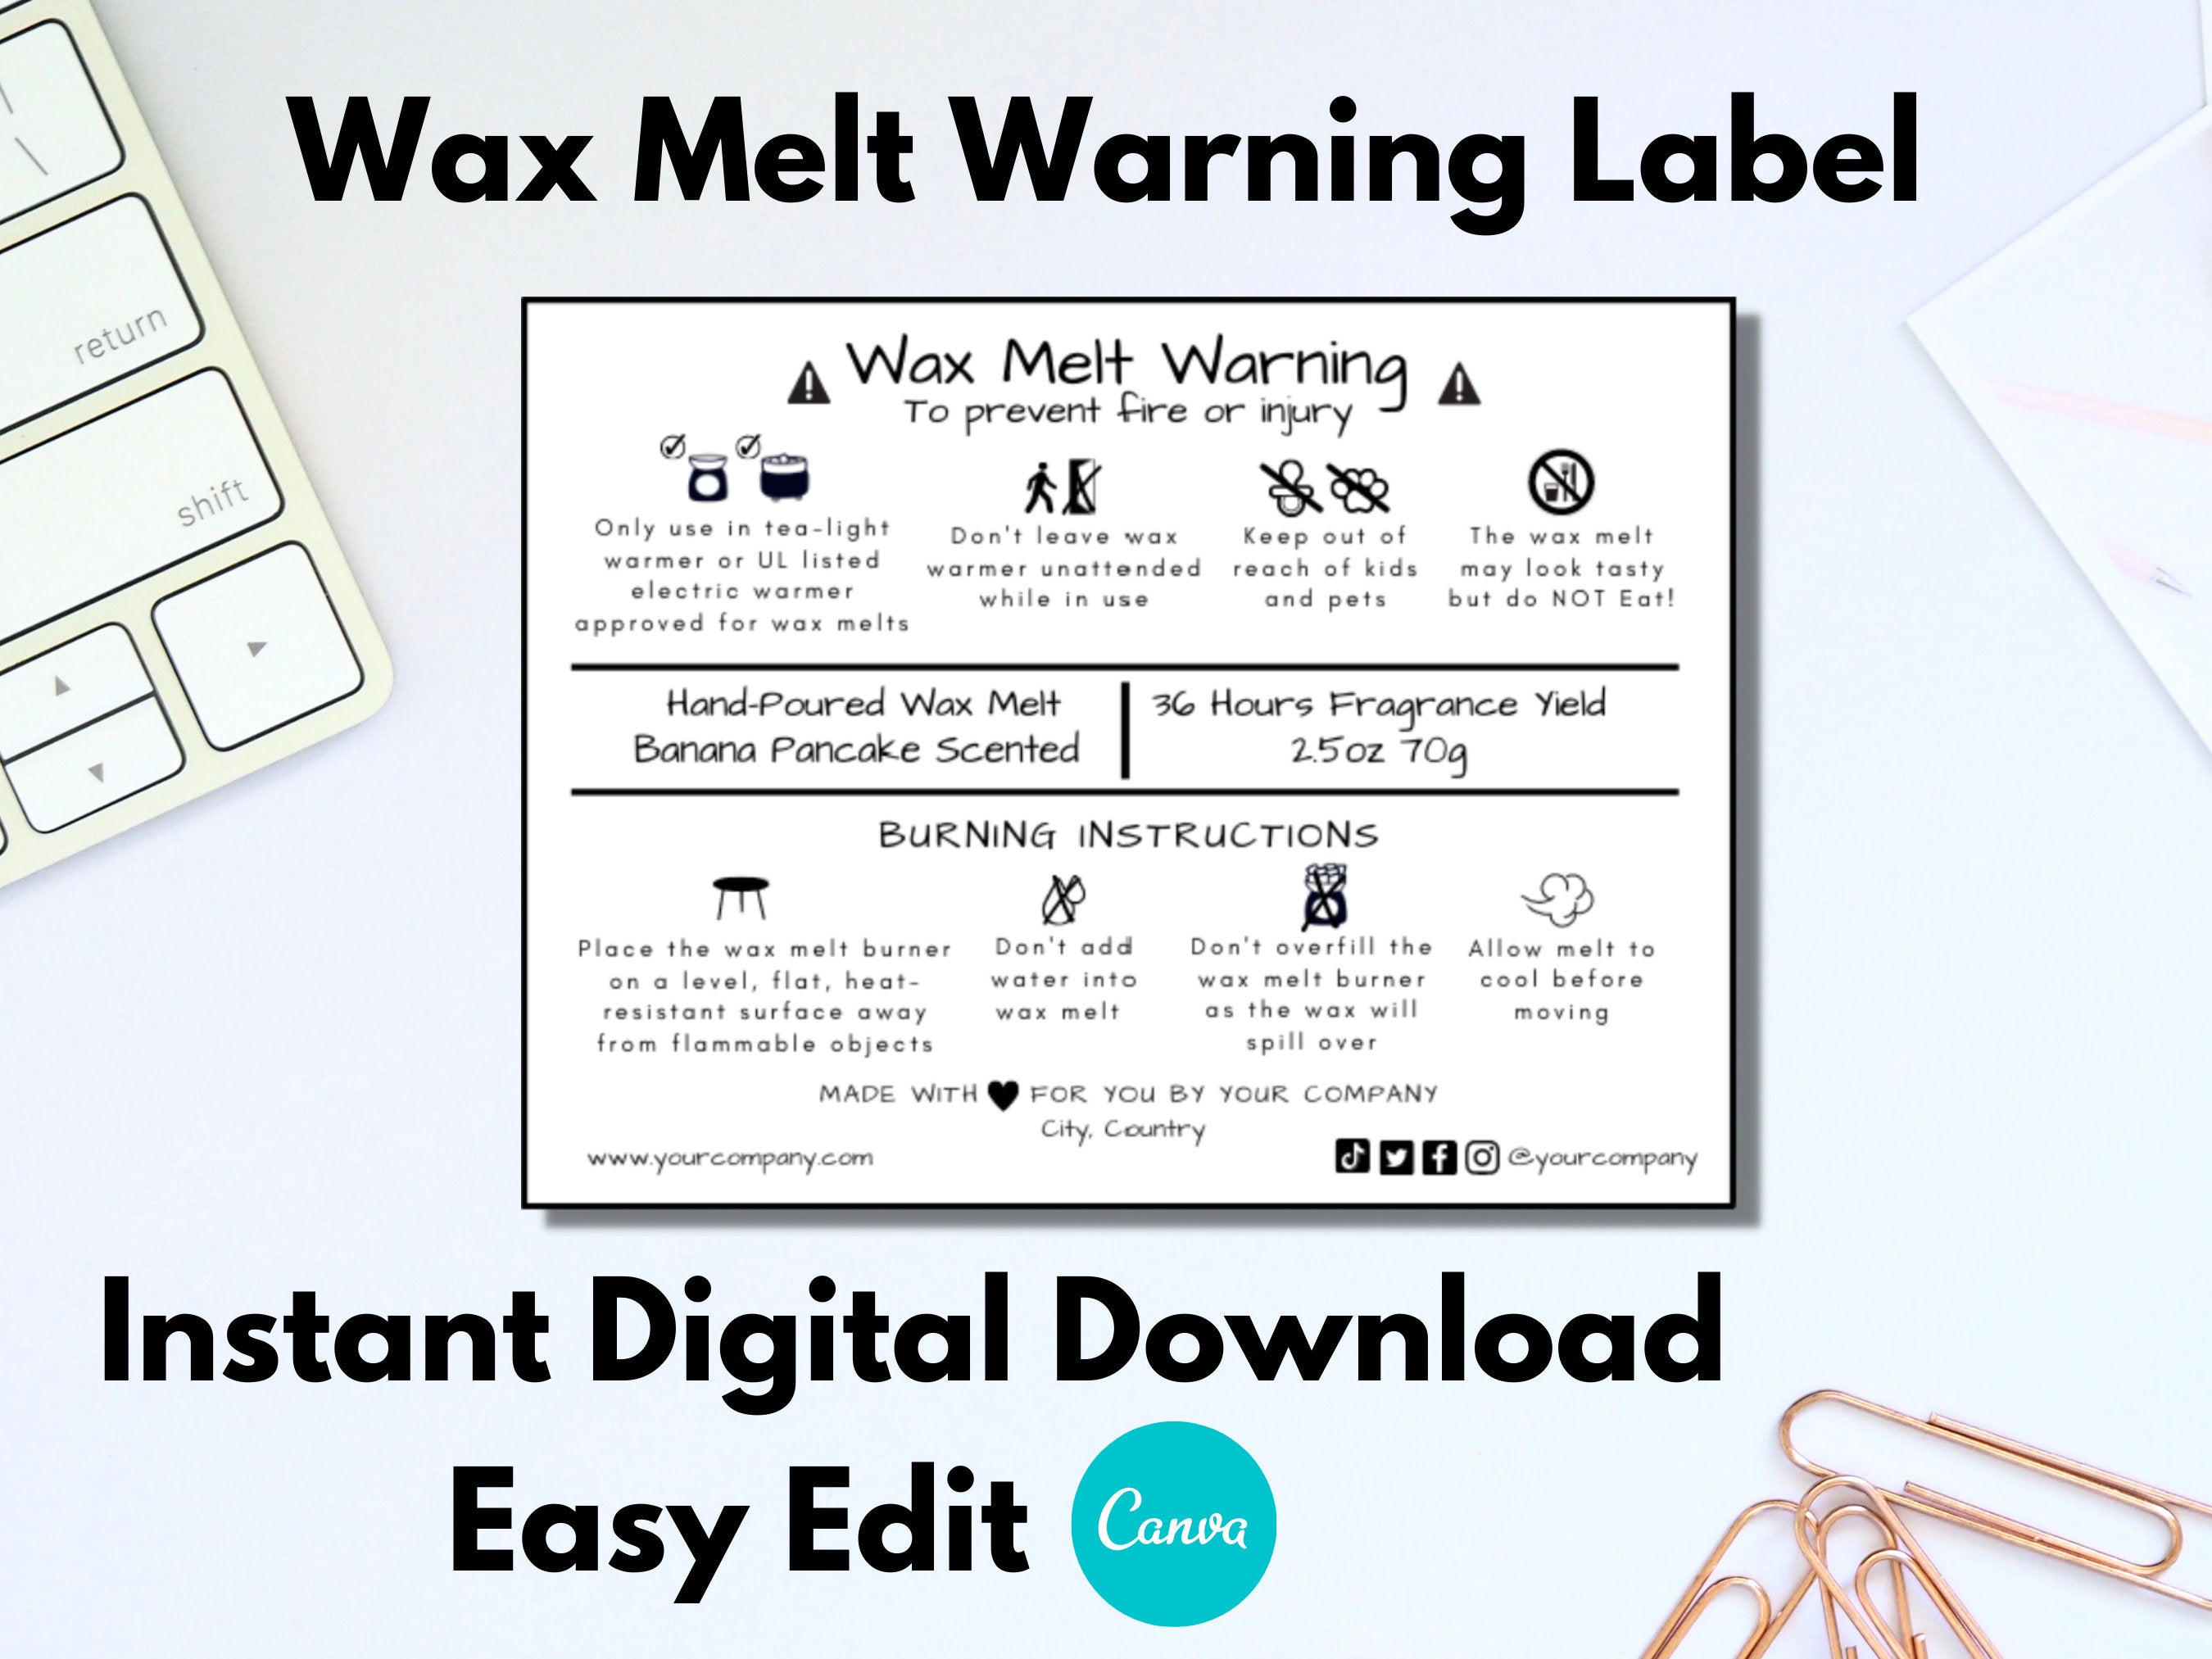 Wax Melt Warning Label Template: Wax Melt Safety Instructions